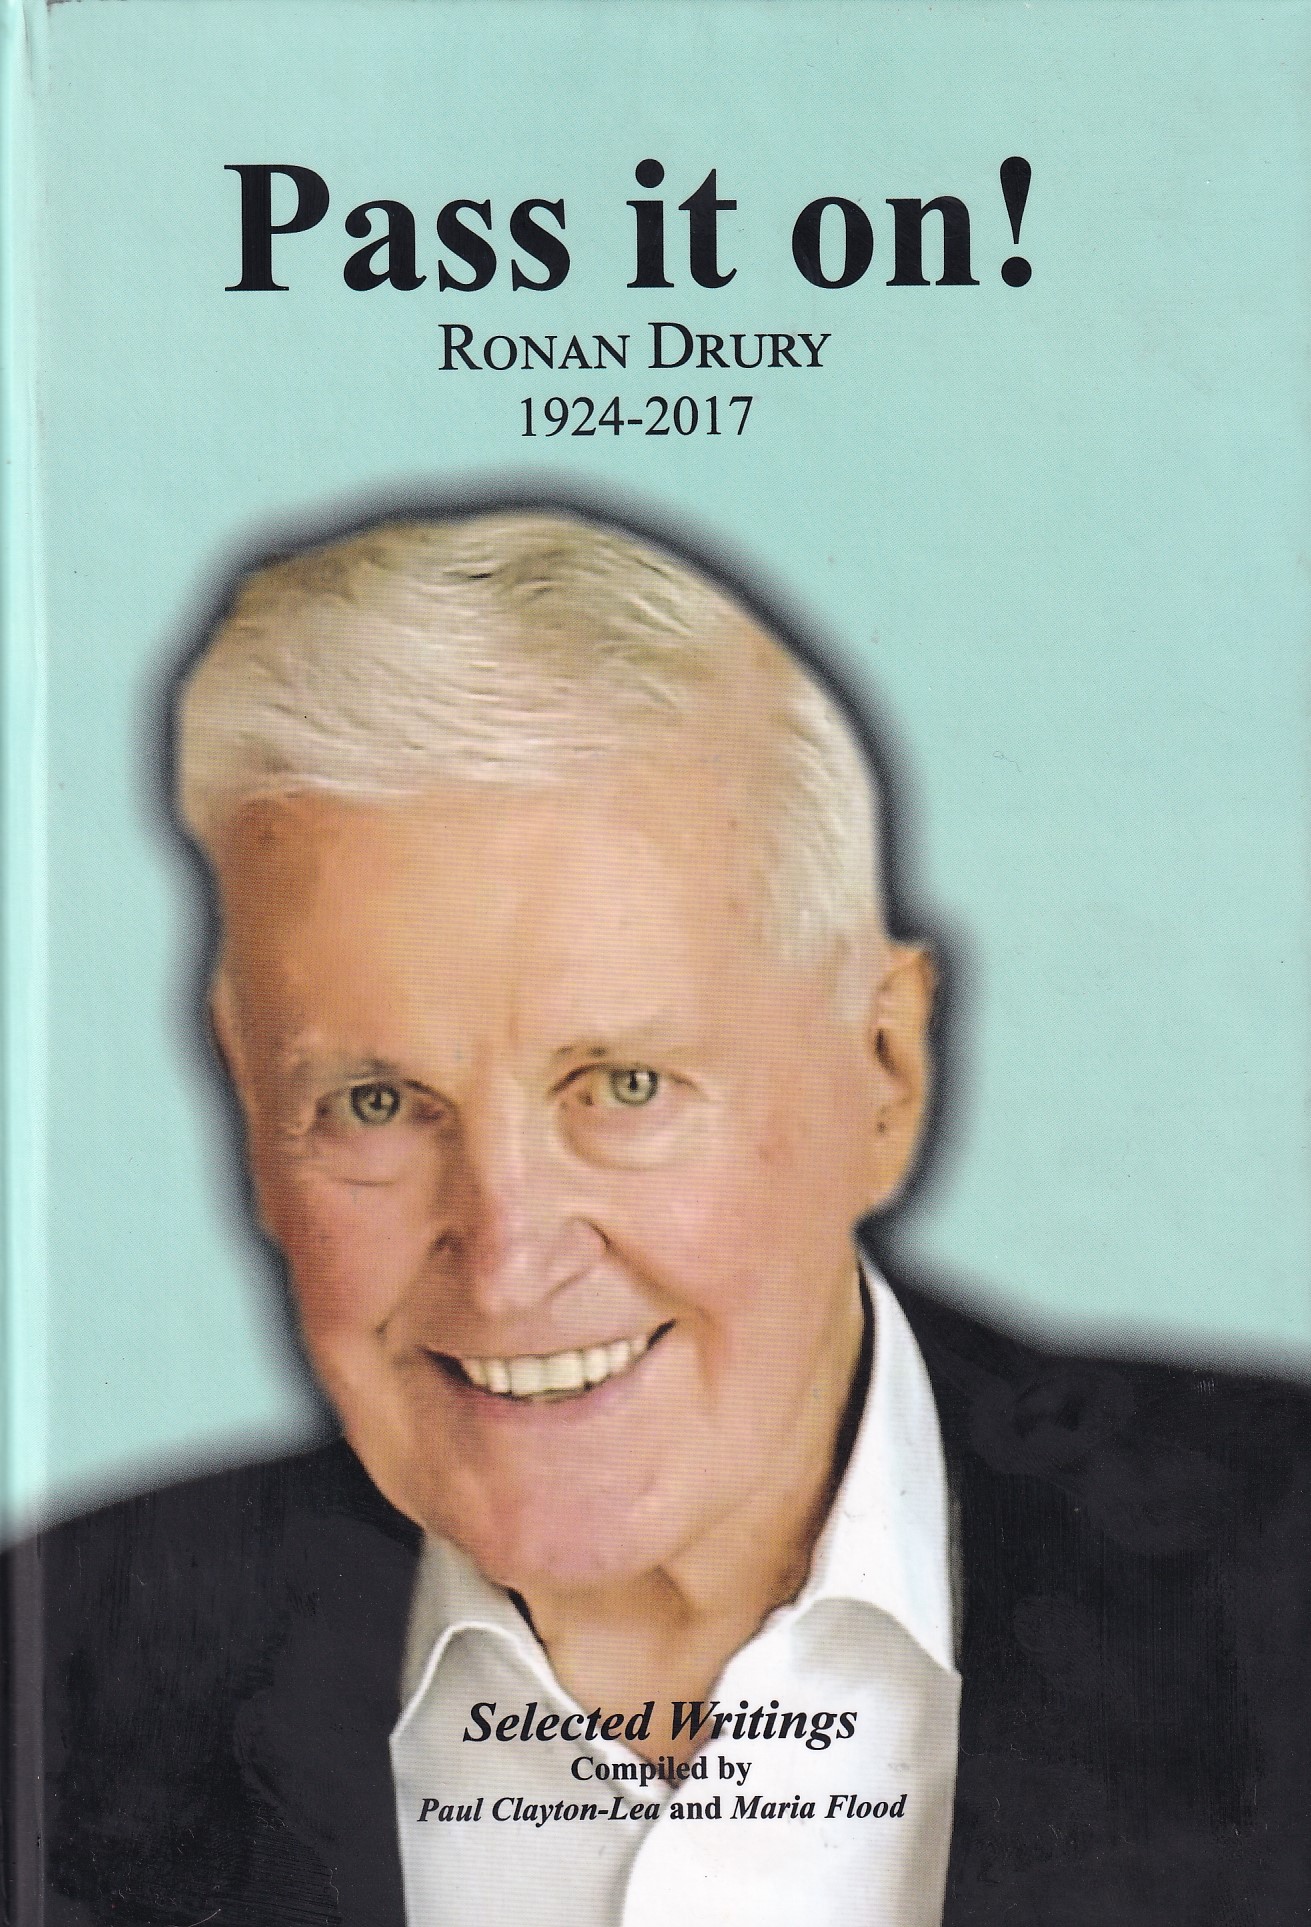 Pass it On! Ronan Drury 1924-2017: Selected Writings by Ronan Drury (comp. Paul Clayton-Lea & Maria Flood)